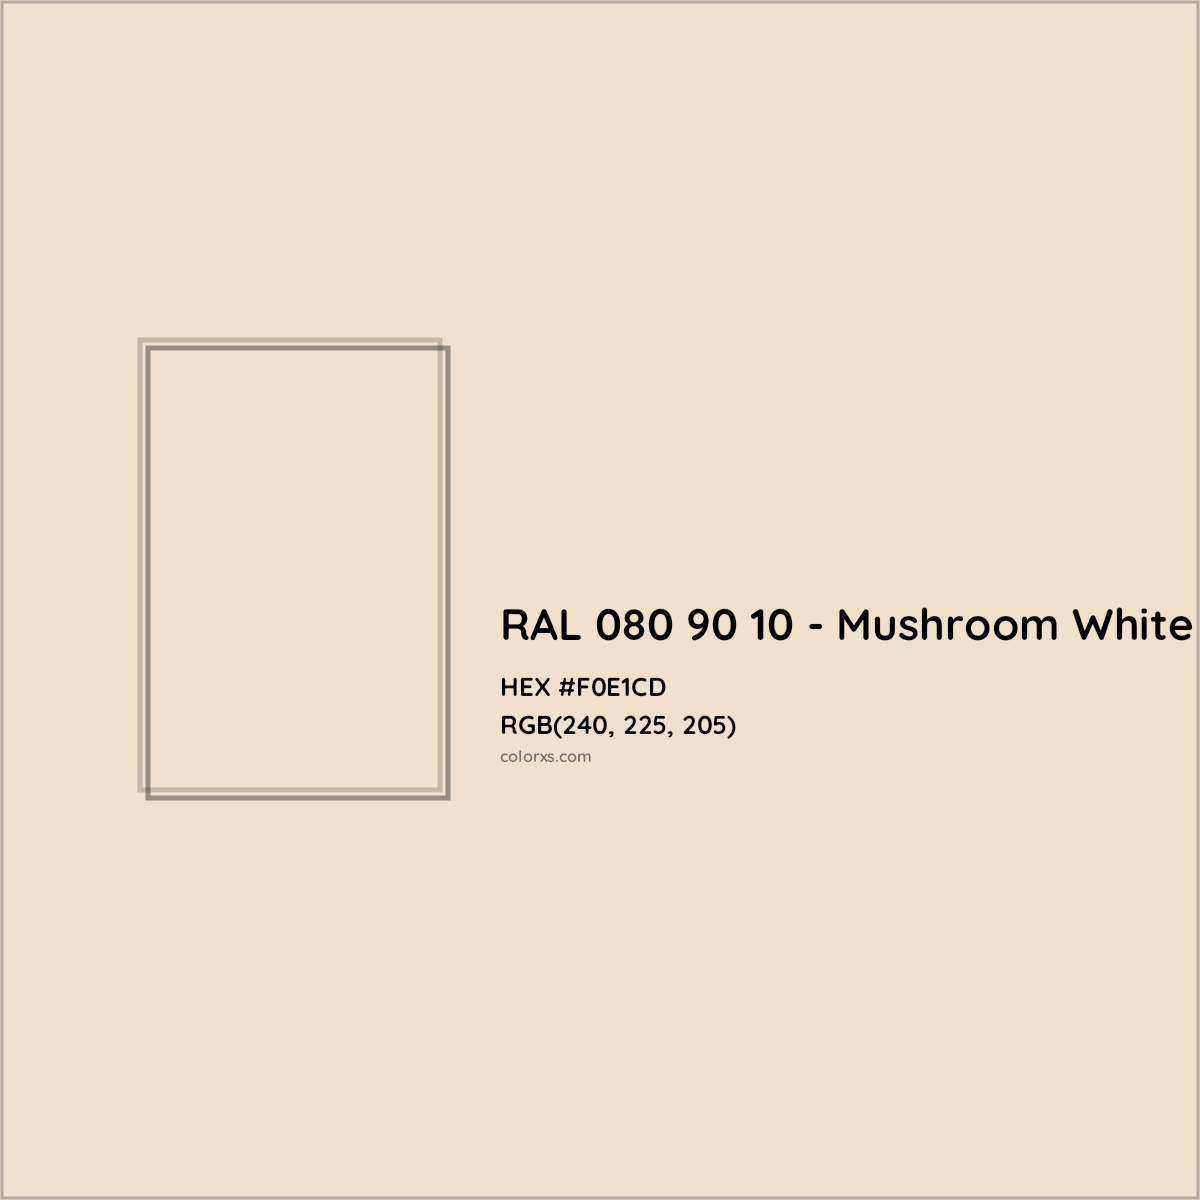 HEX #F0E1CD RAL 080 90 10 - Mushroom White CMS RAL Design - Color Code